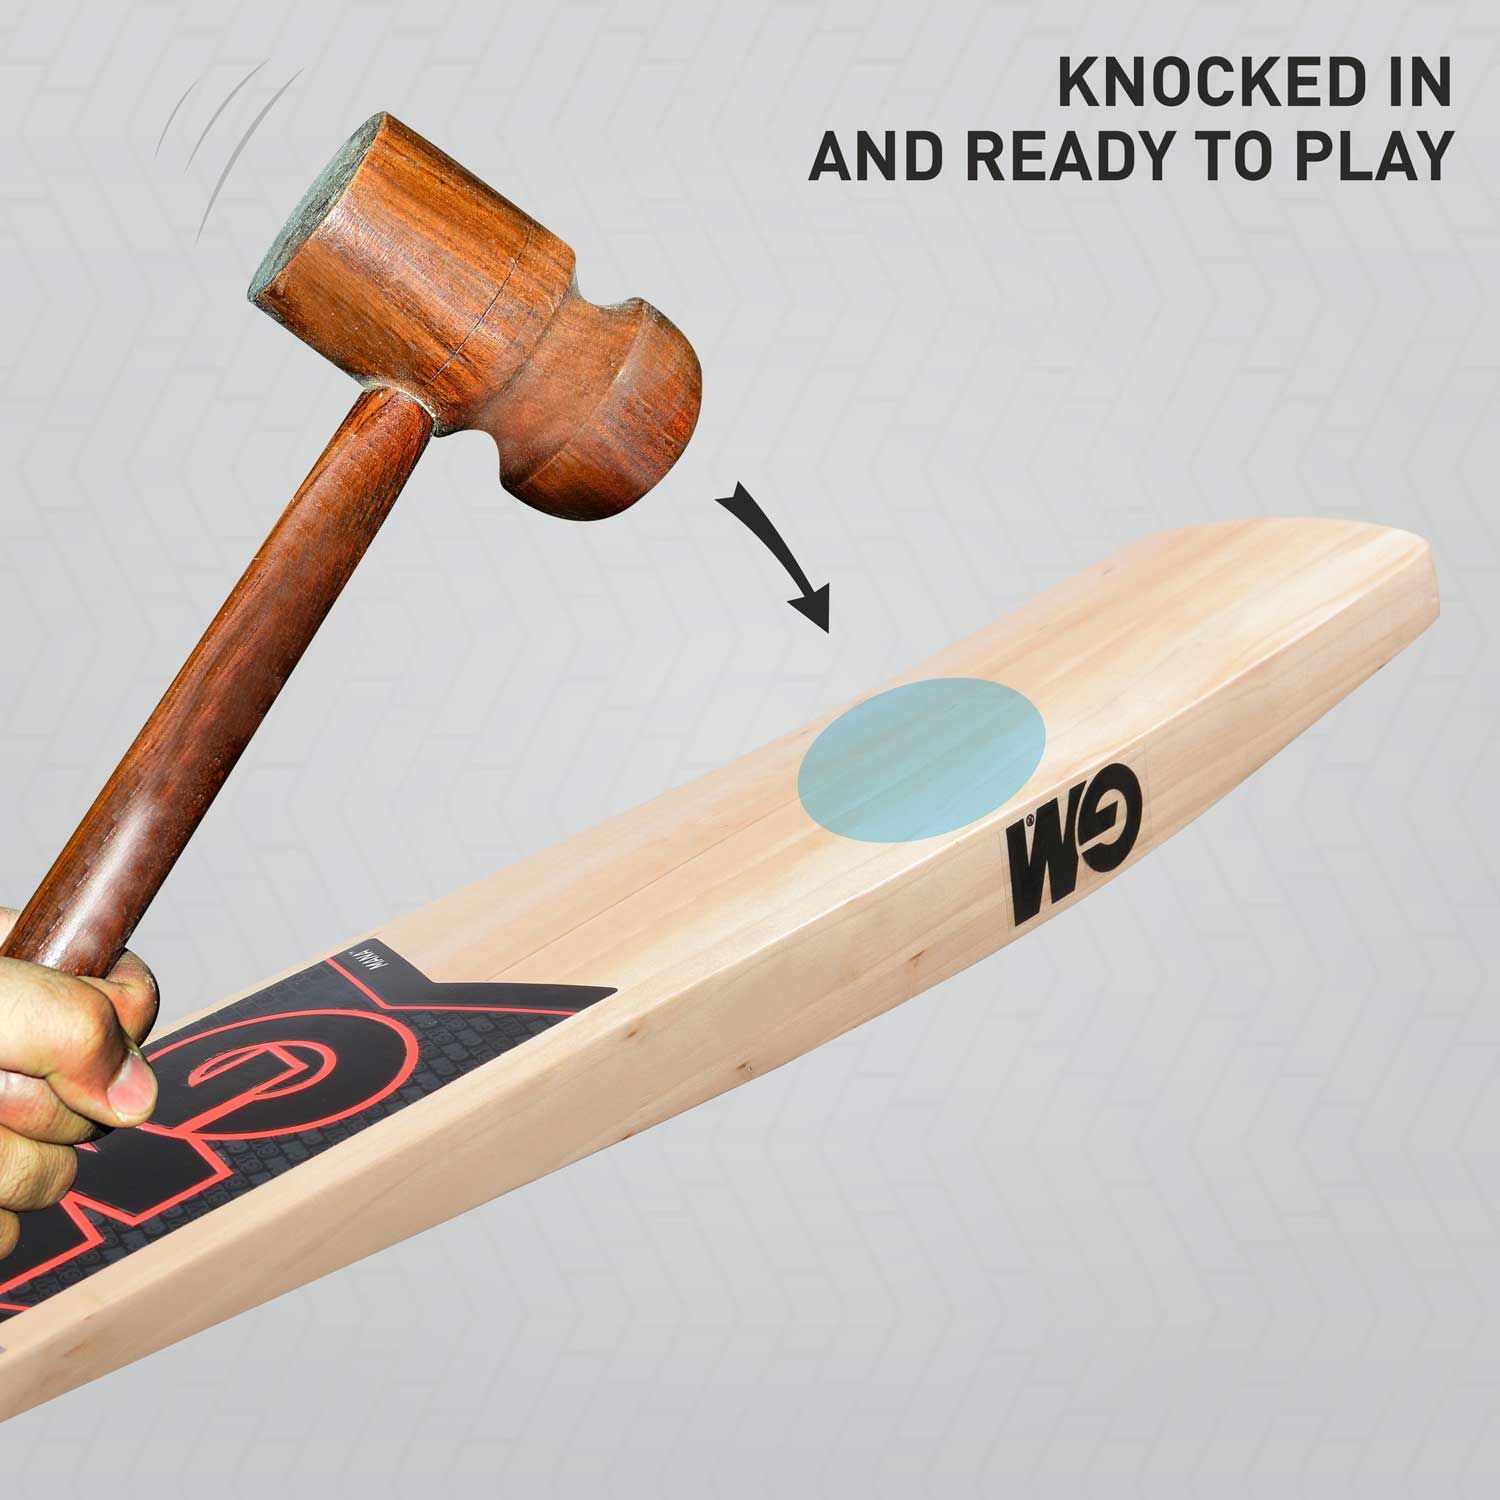 Mana Premier Kashmir Willow Cricket Bat